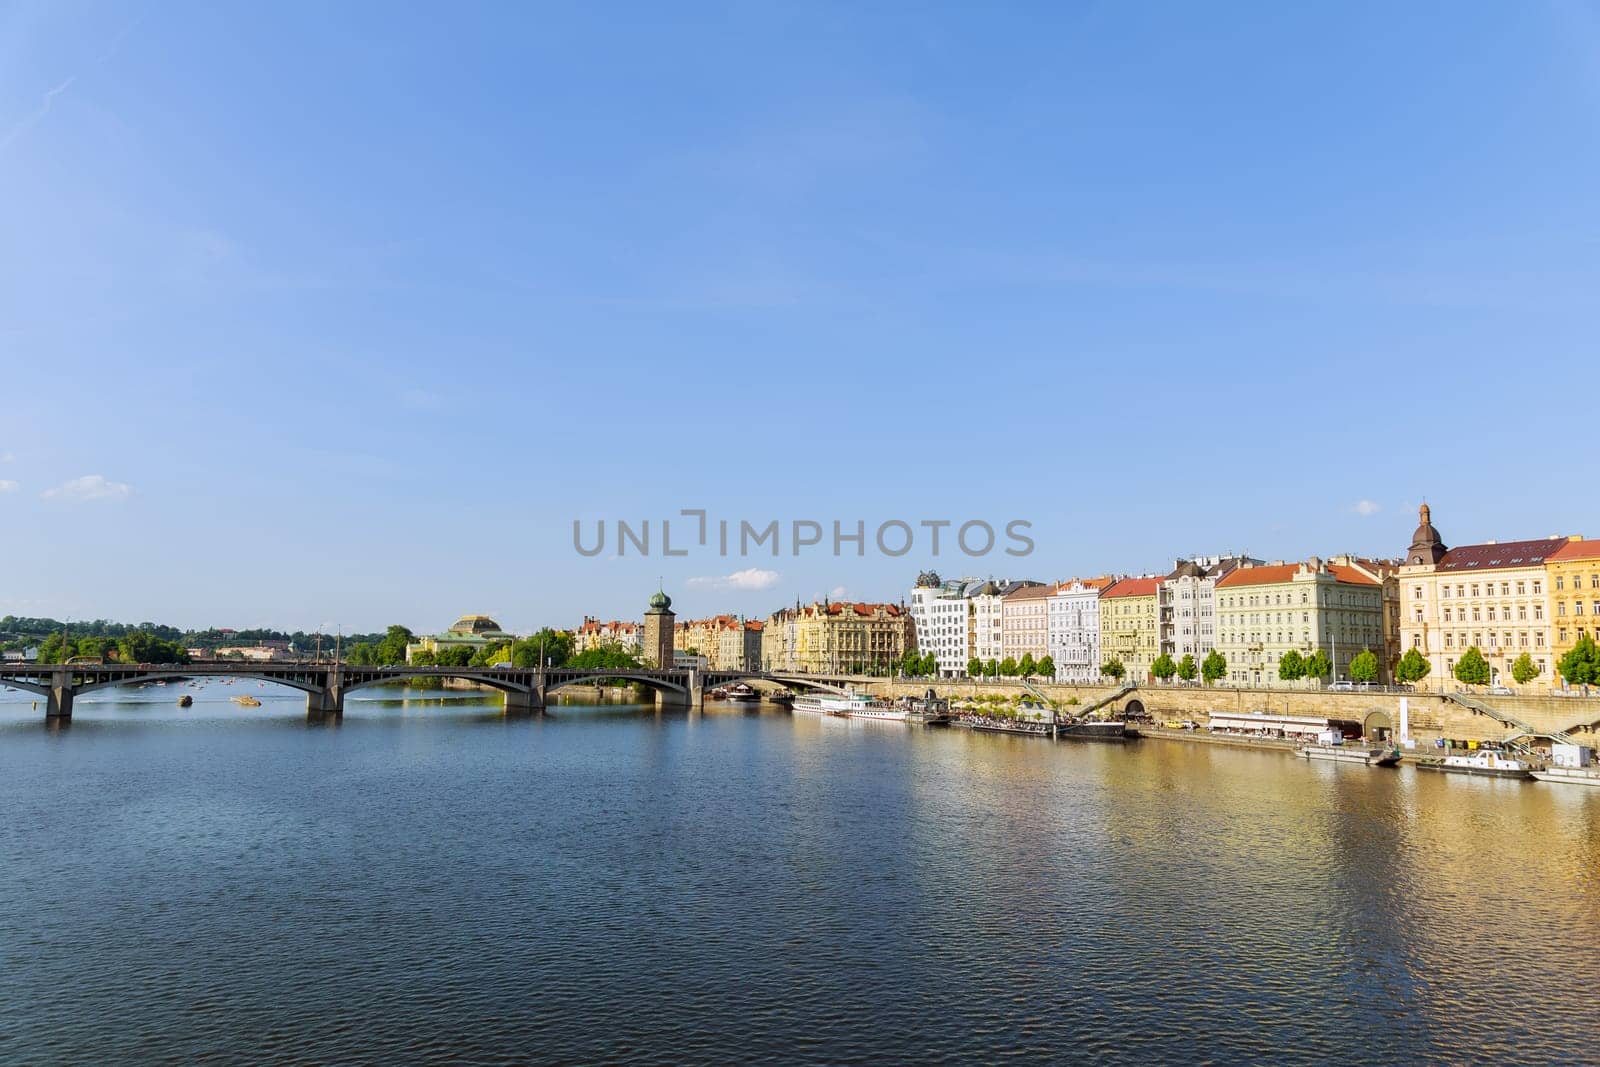 22 May 2022 Prague, Czech Republic. Vltava River flows through heart of Prague, enhancing its scenic beauty. Prague, capital of Czech Republic, is renowned for its stunning architecture.